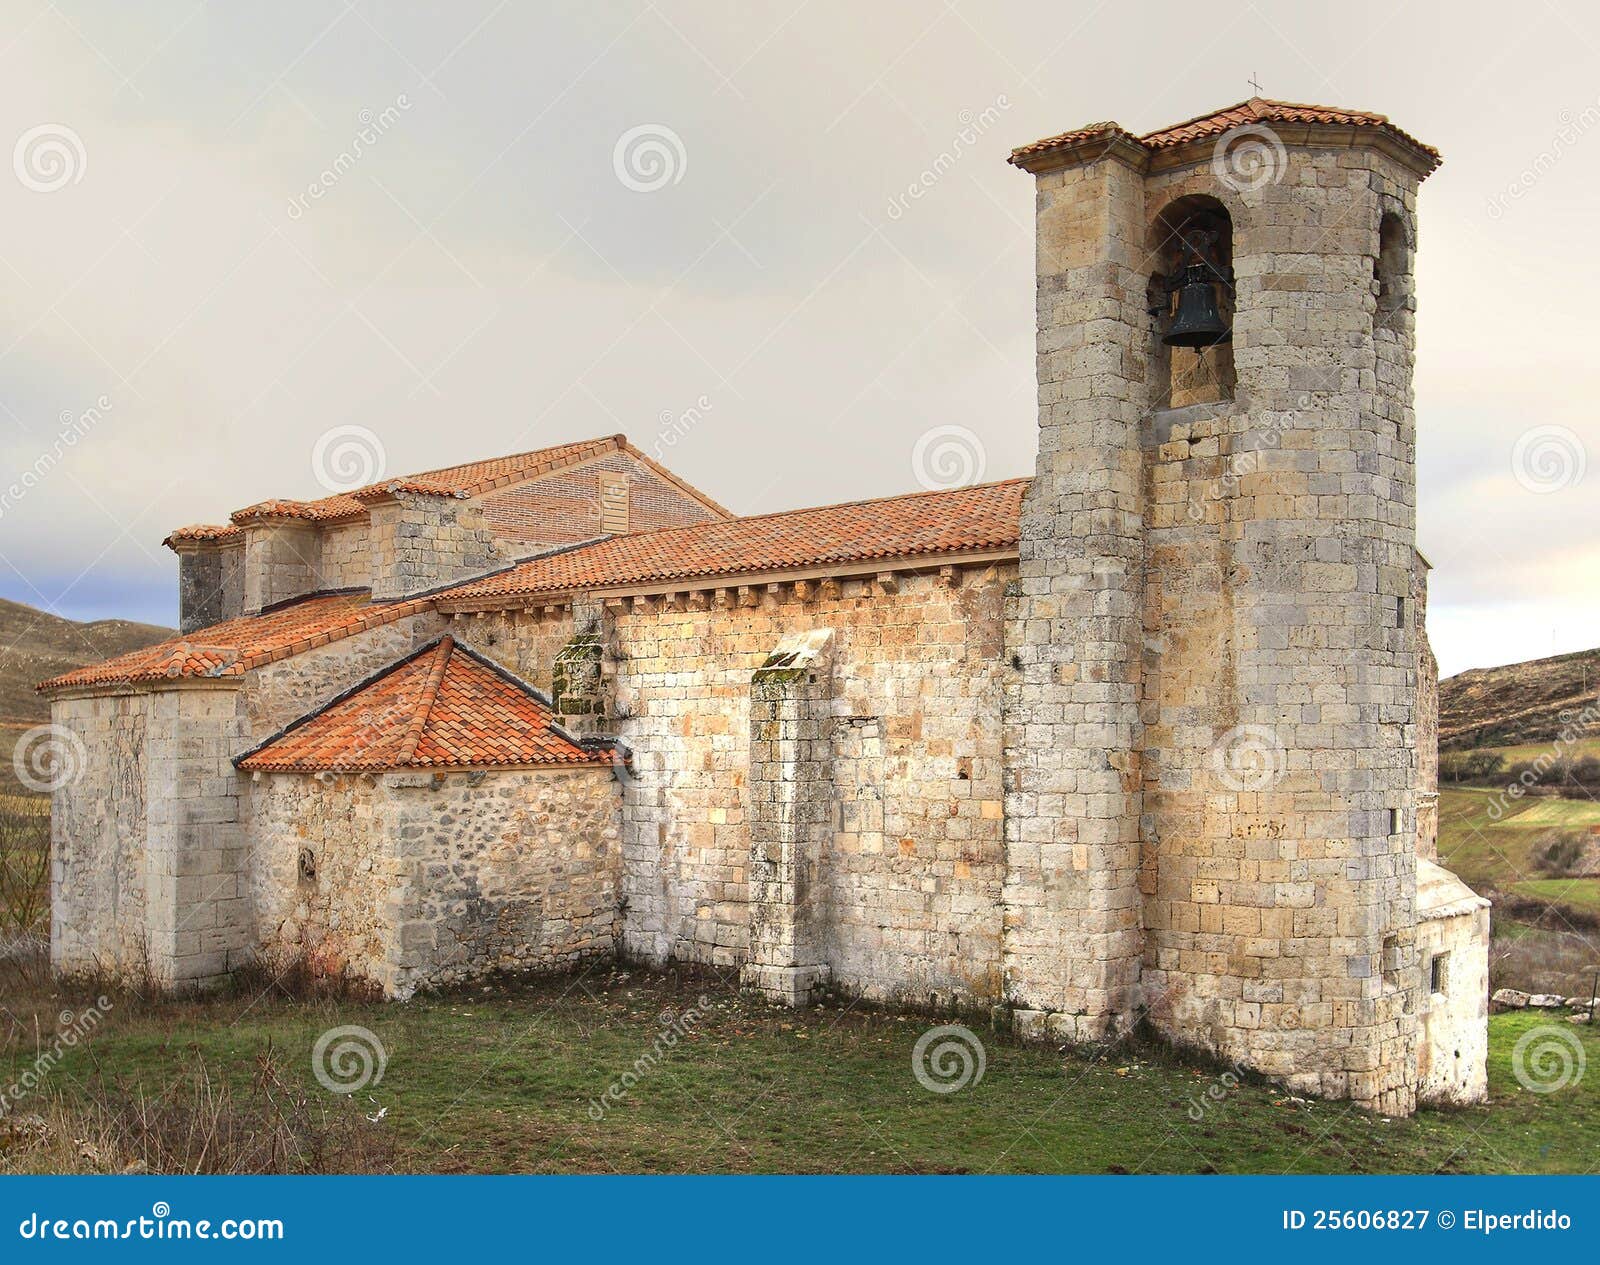 romanesque church of santa marina